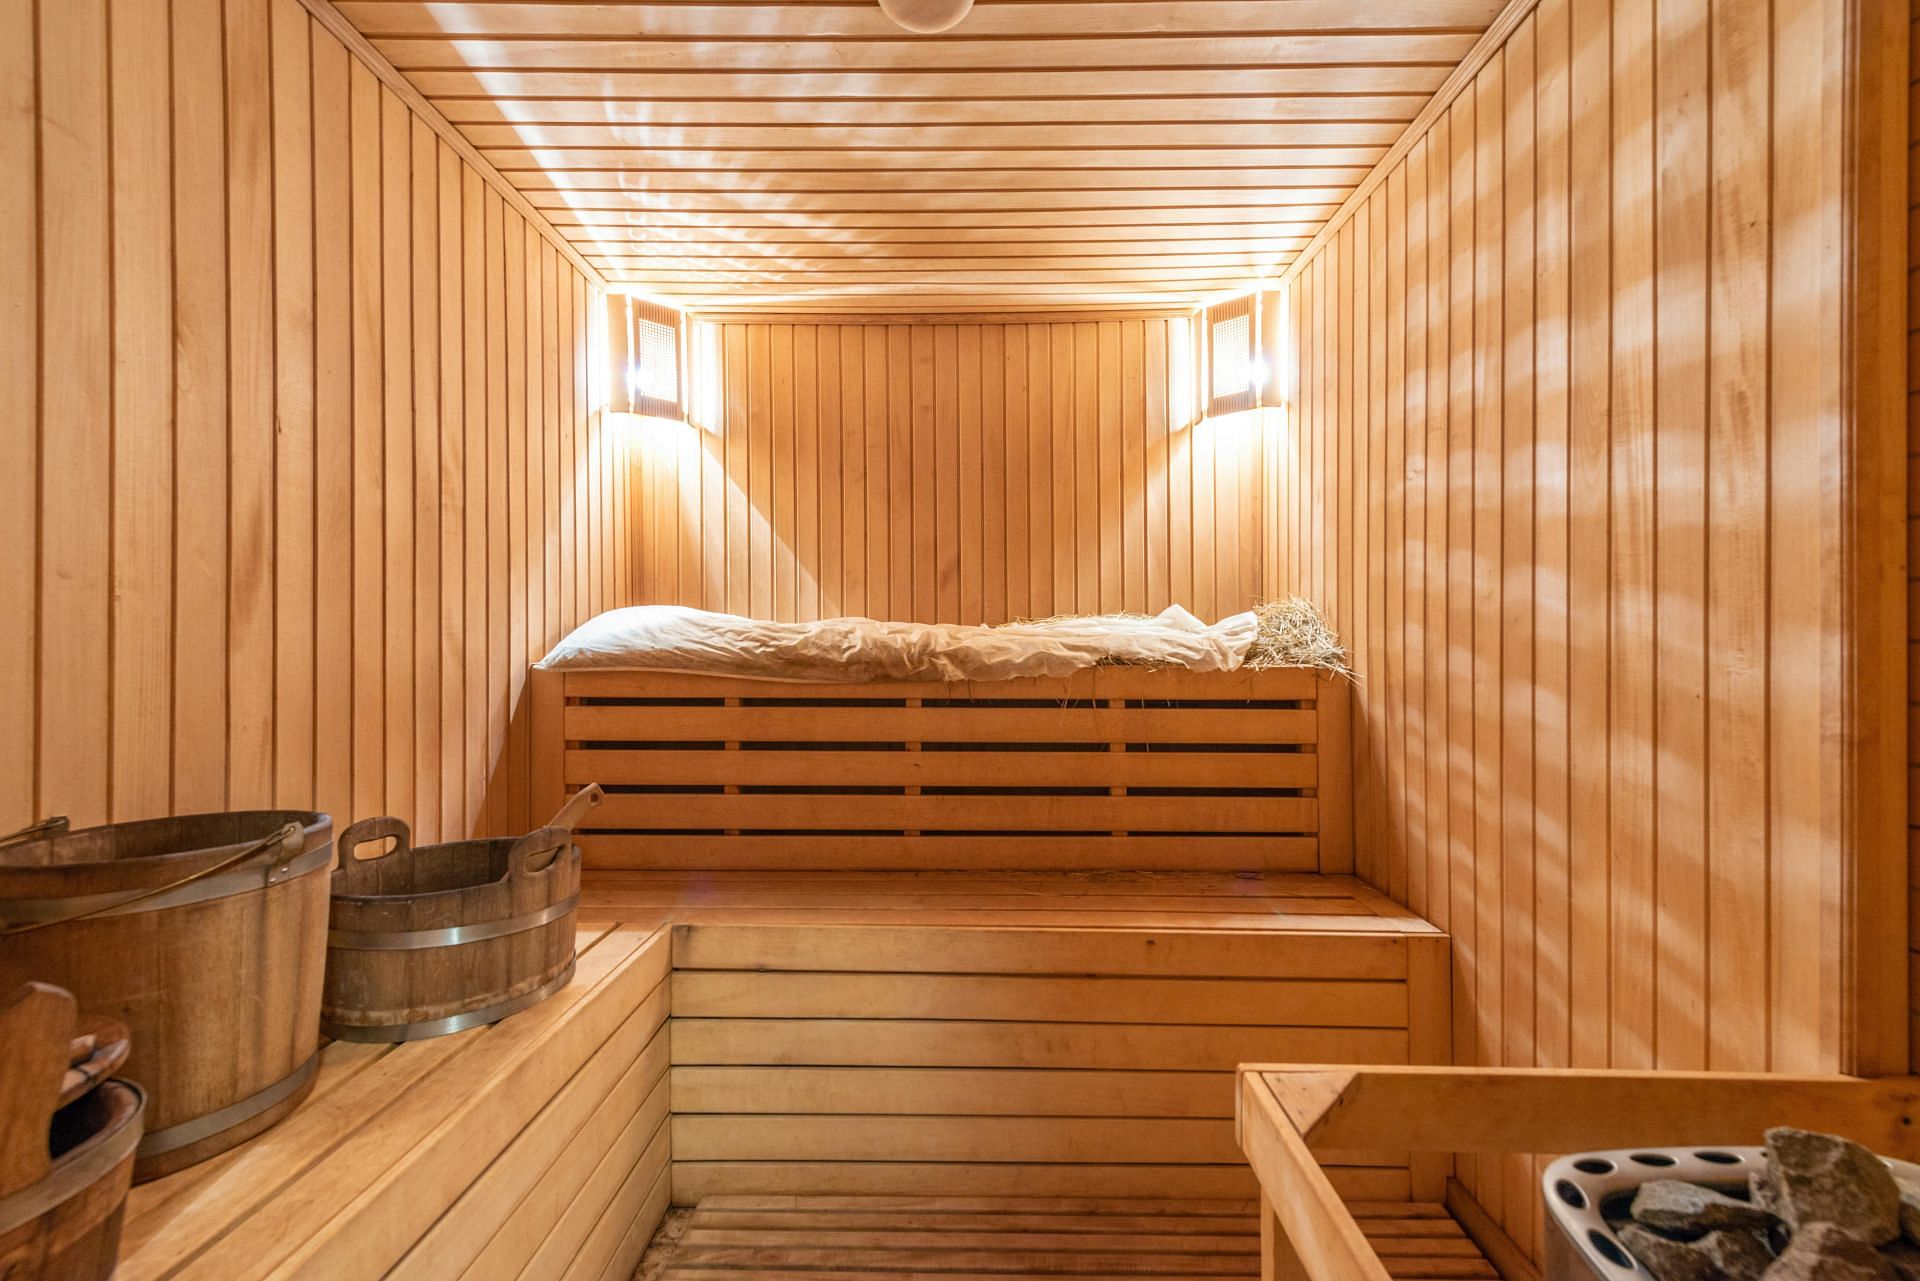 Sauna vs steam room (image sourced via Pexels / Photo by max)